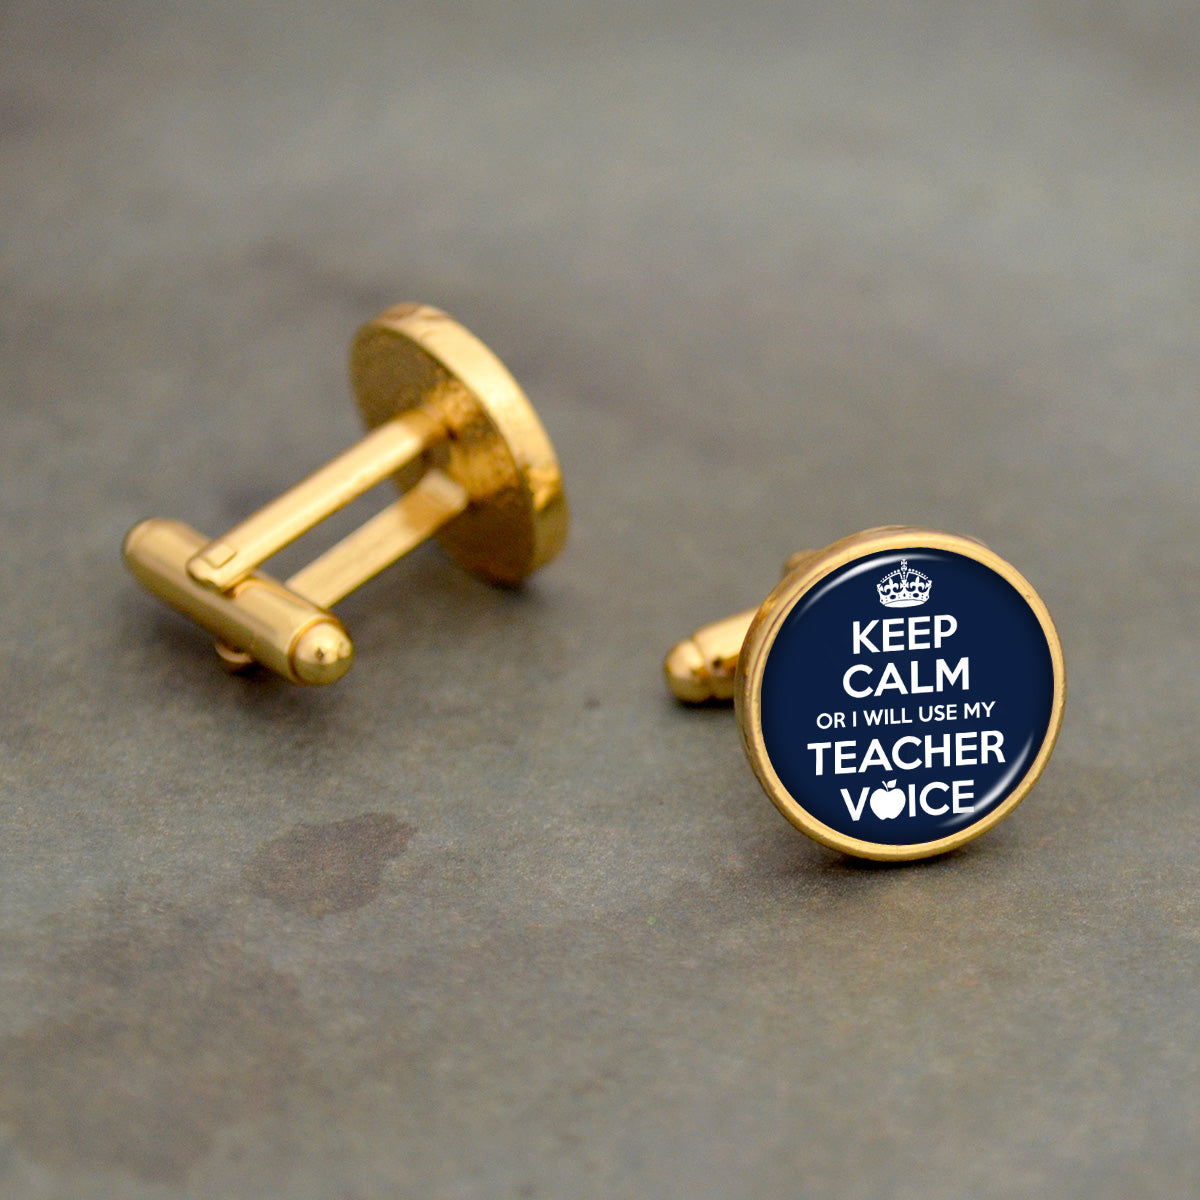 "Keep Calm Or I Will Use My Teacher Voice" Cuff Links